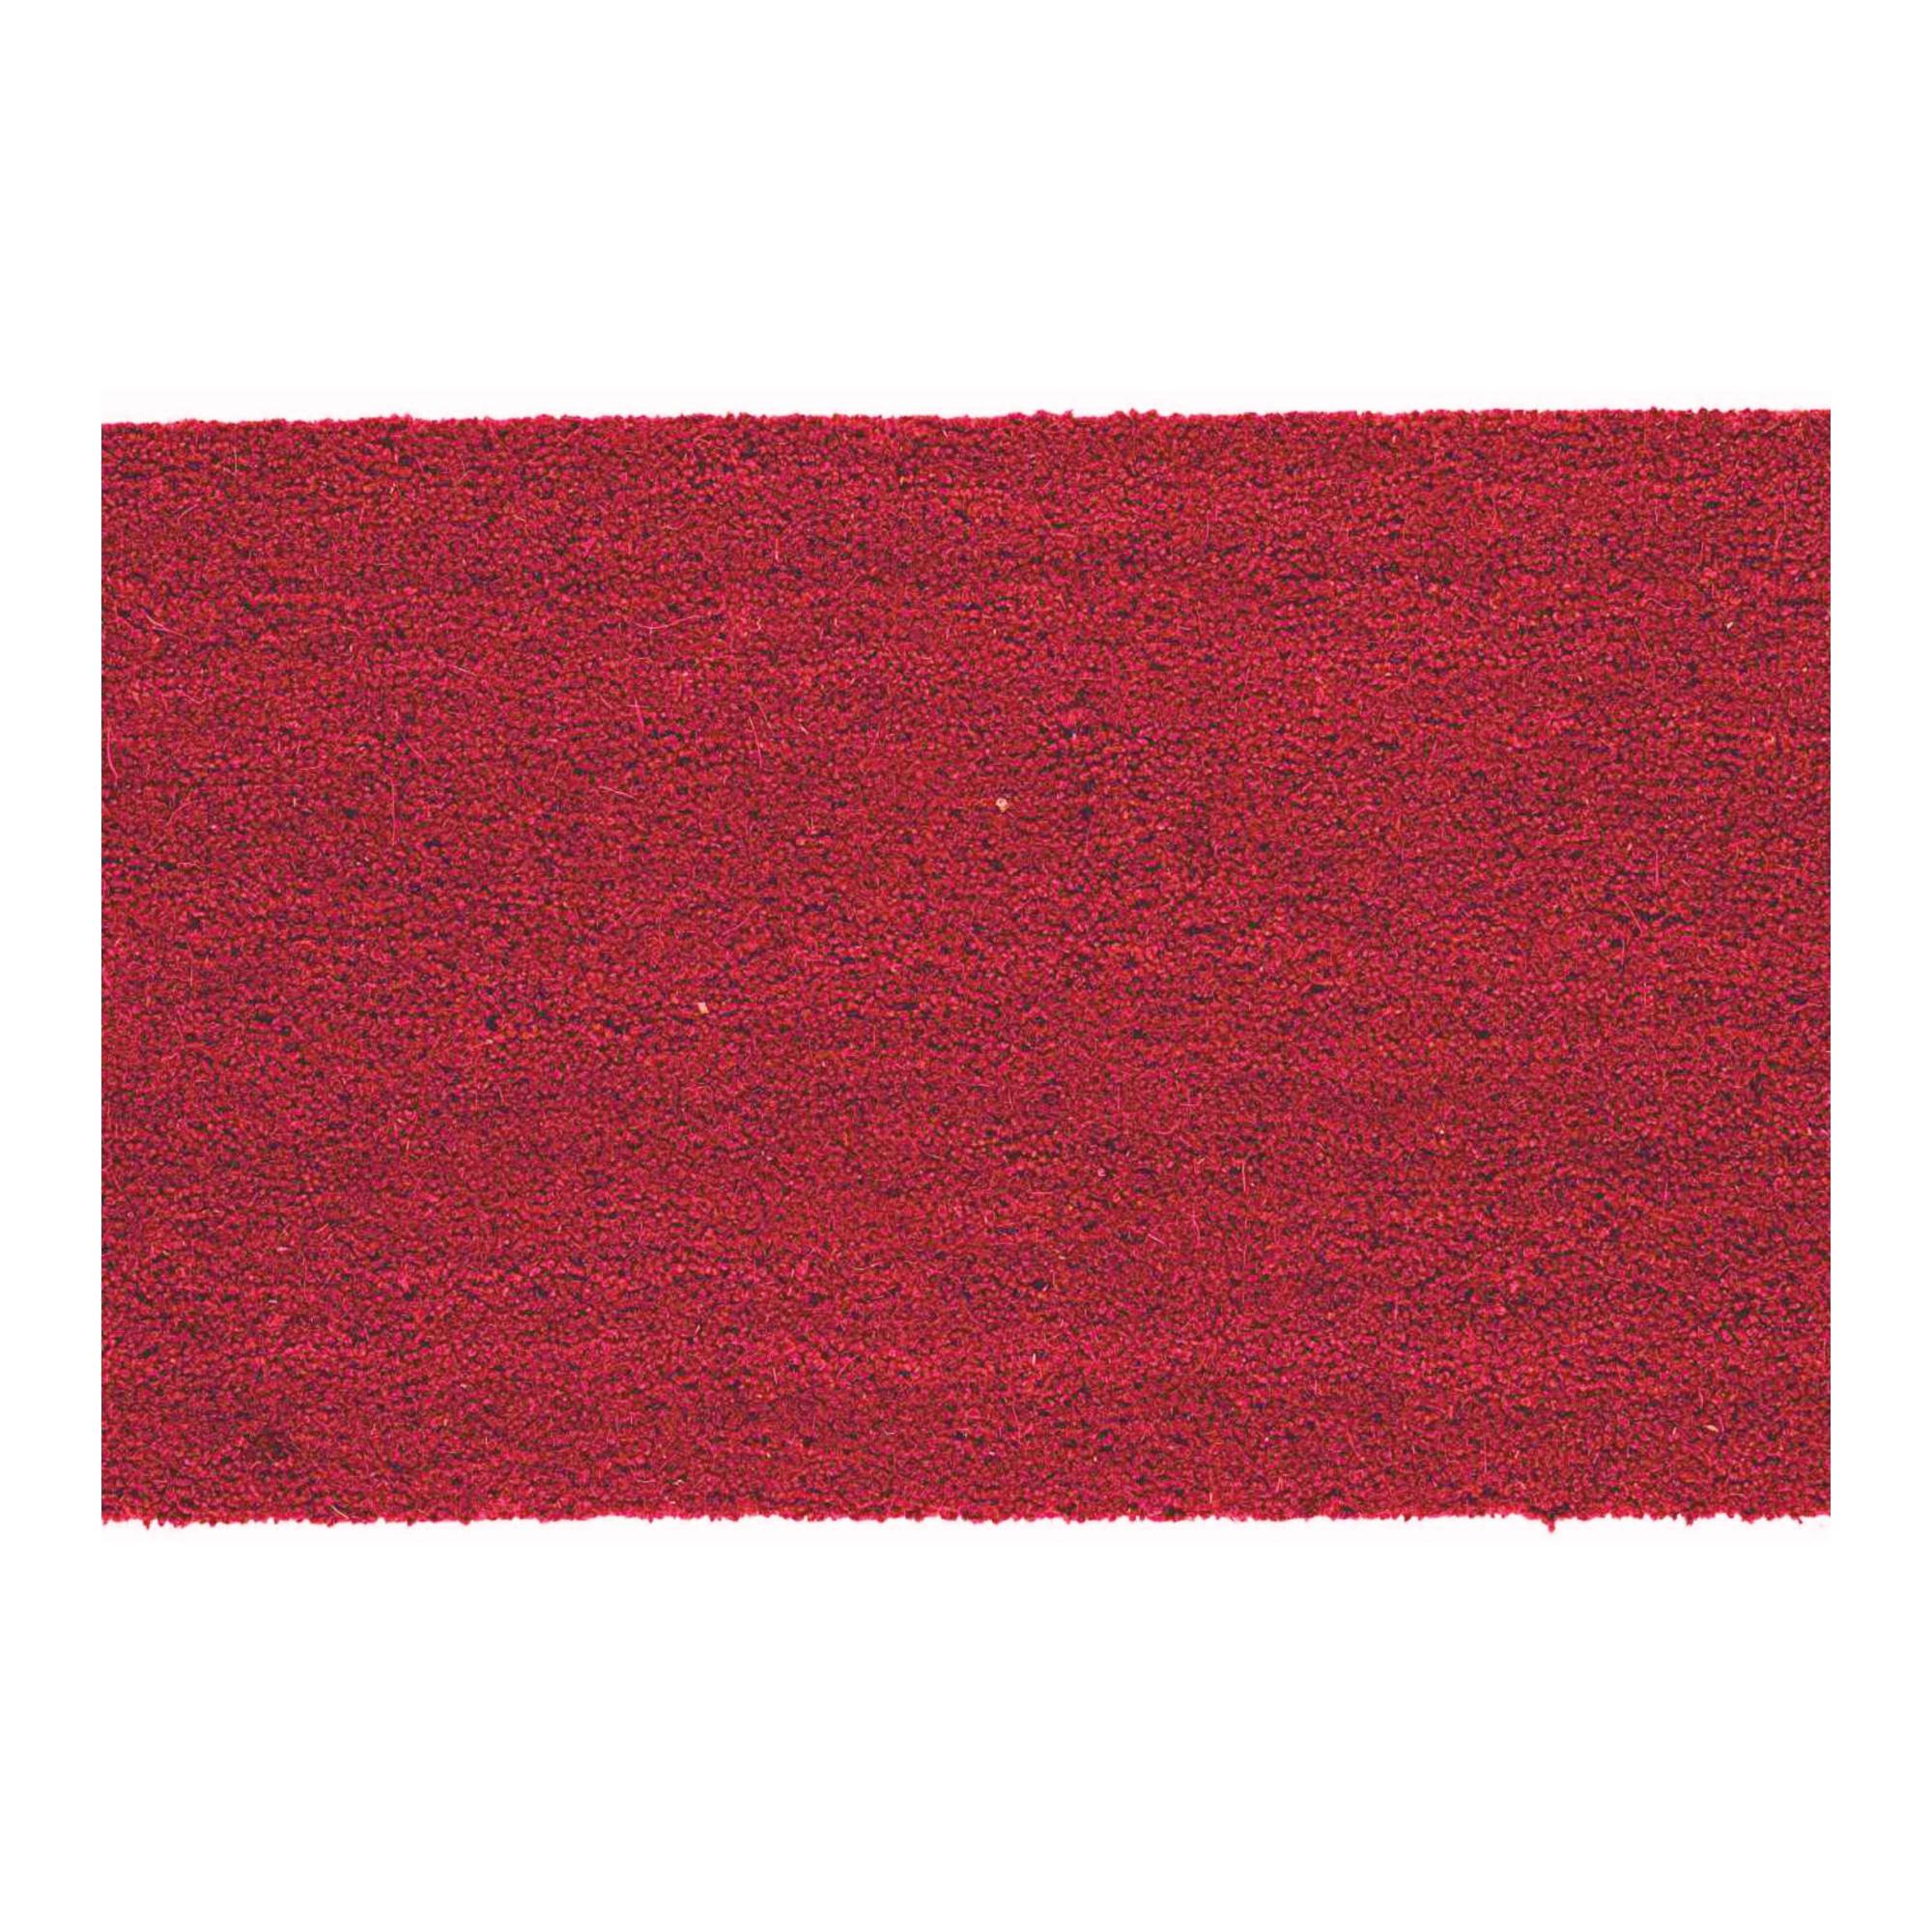 Zerbino Red in cocco rosso 60x40 cm